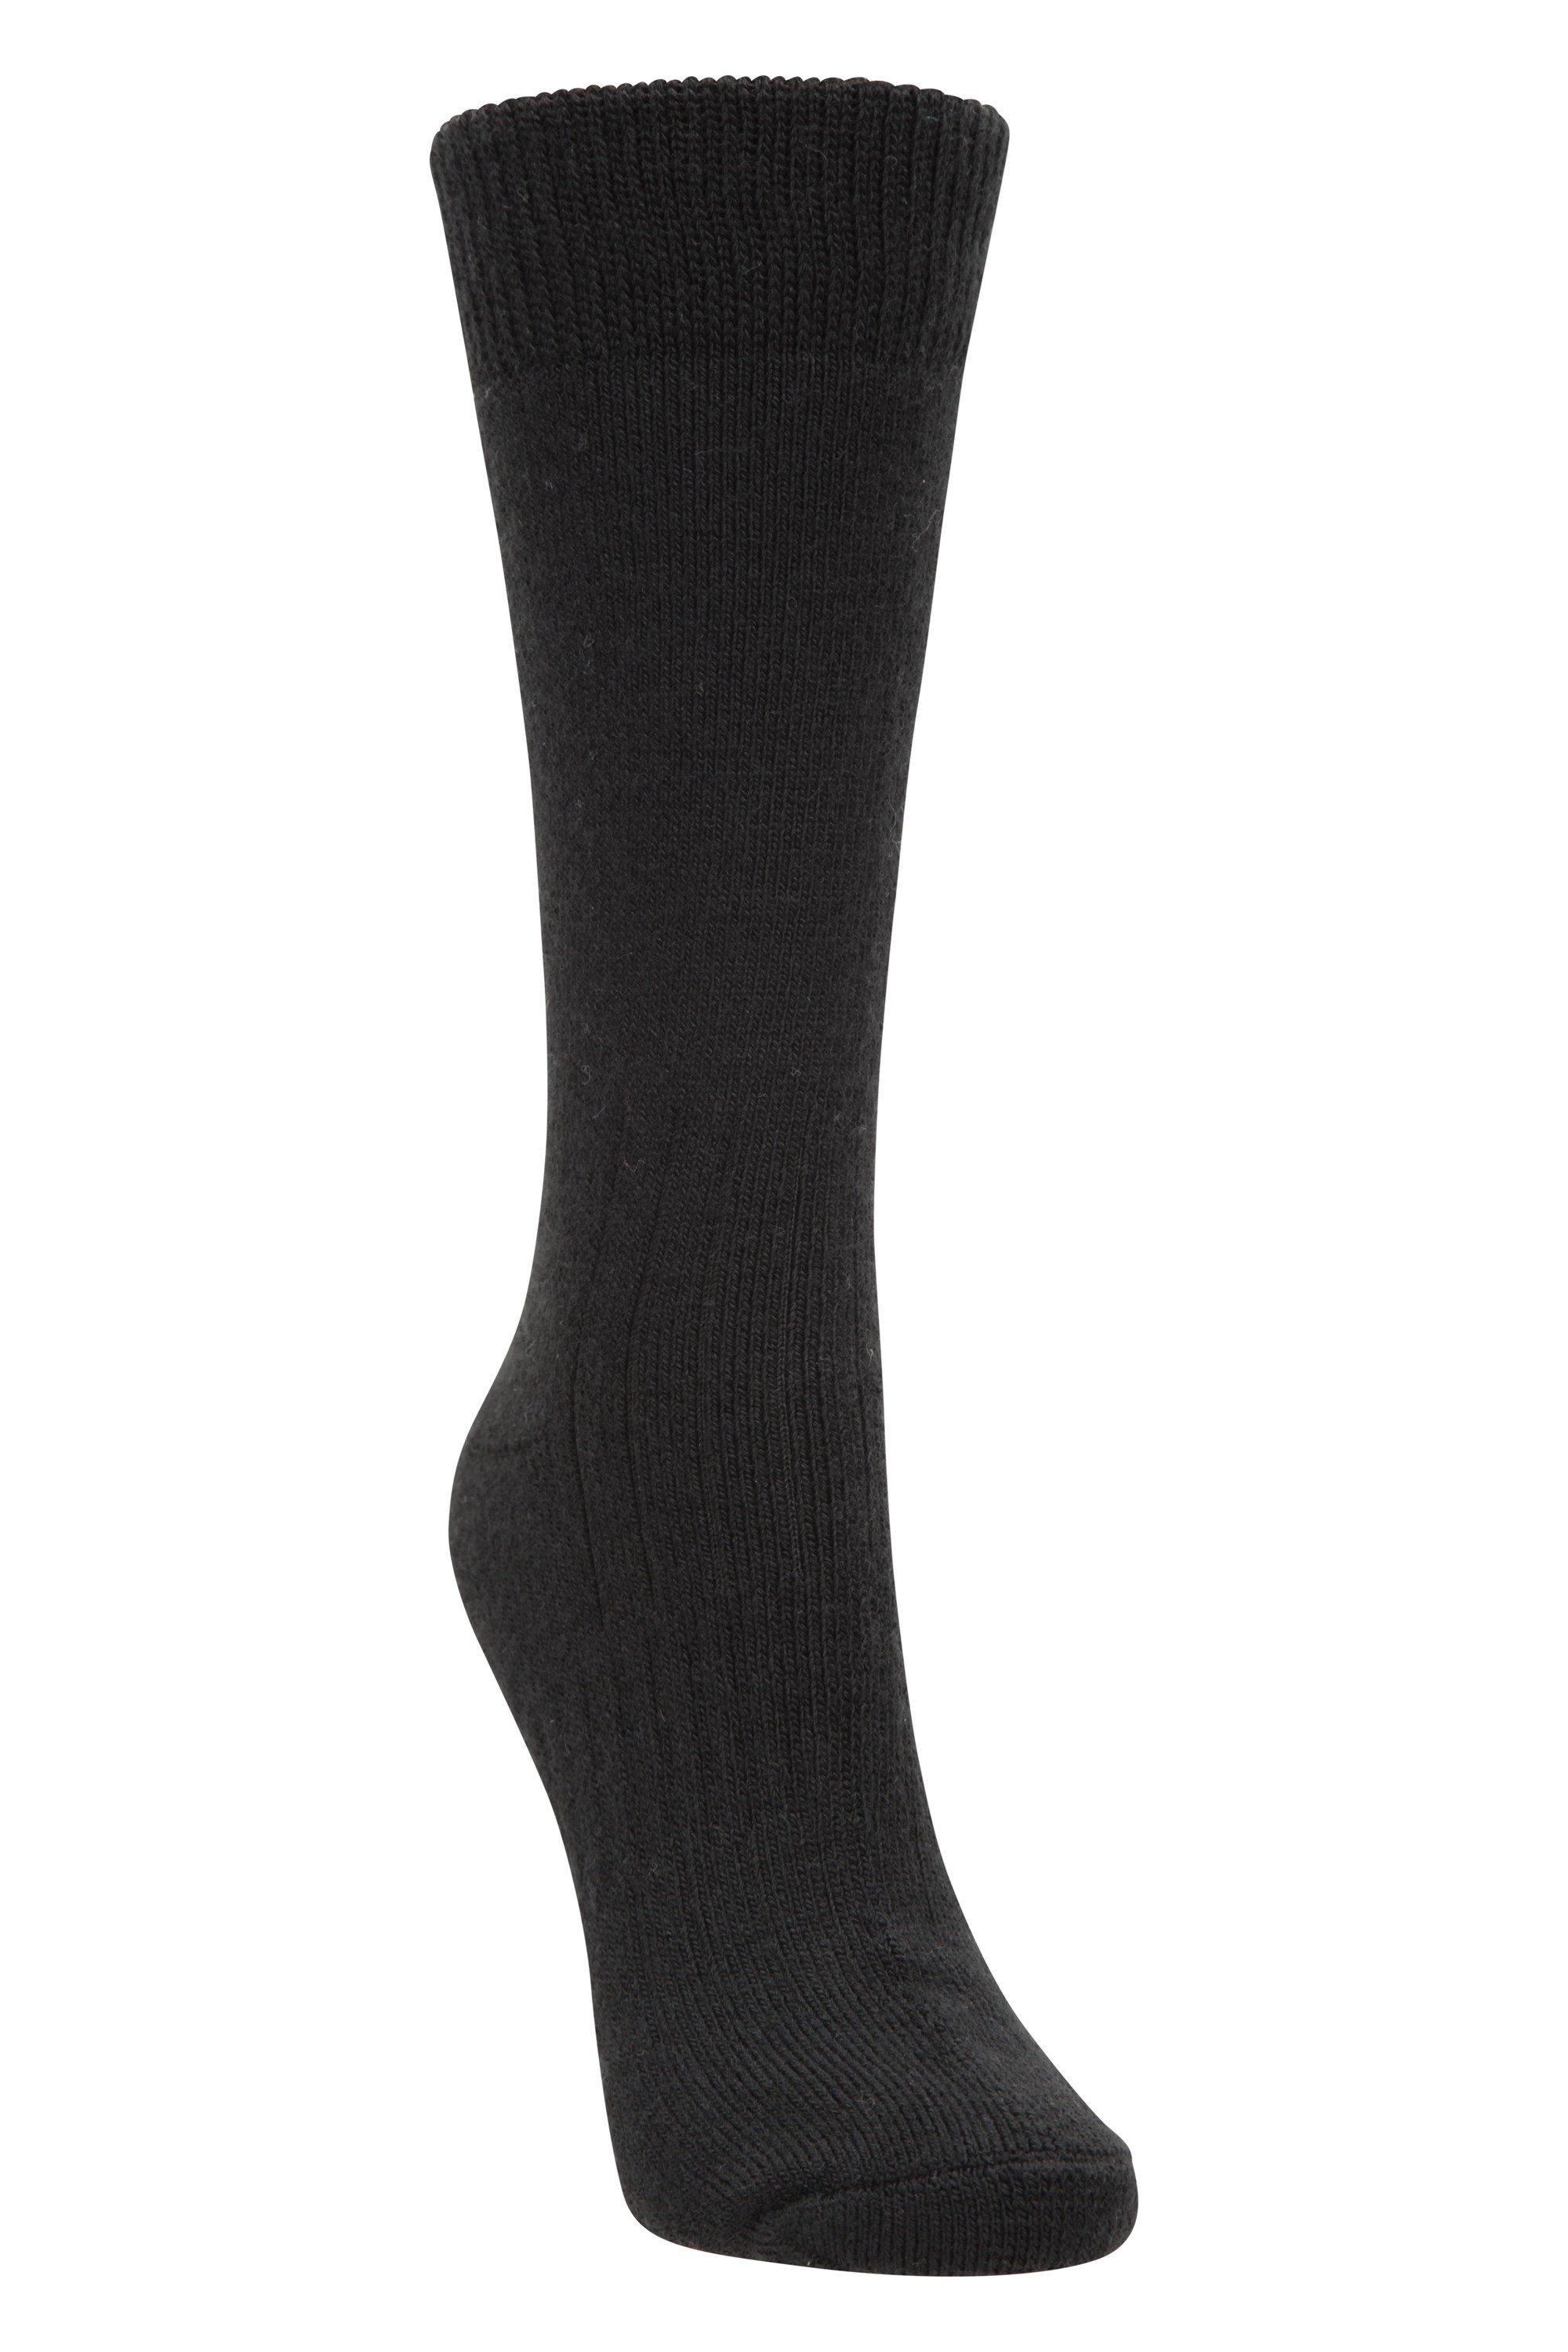 IsoCool Womens Hiker Socks - Black